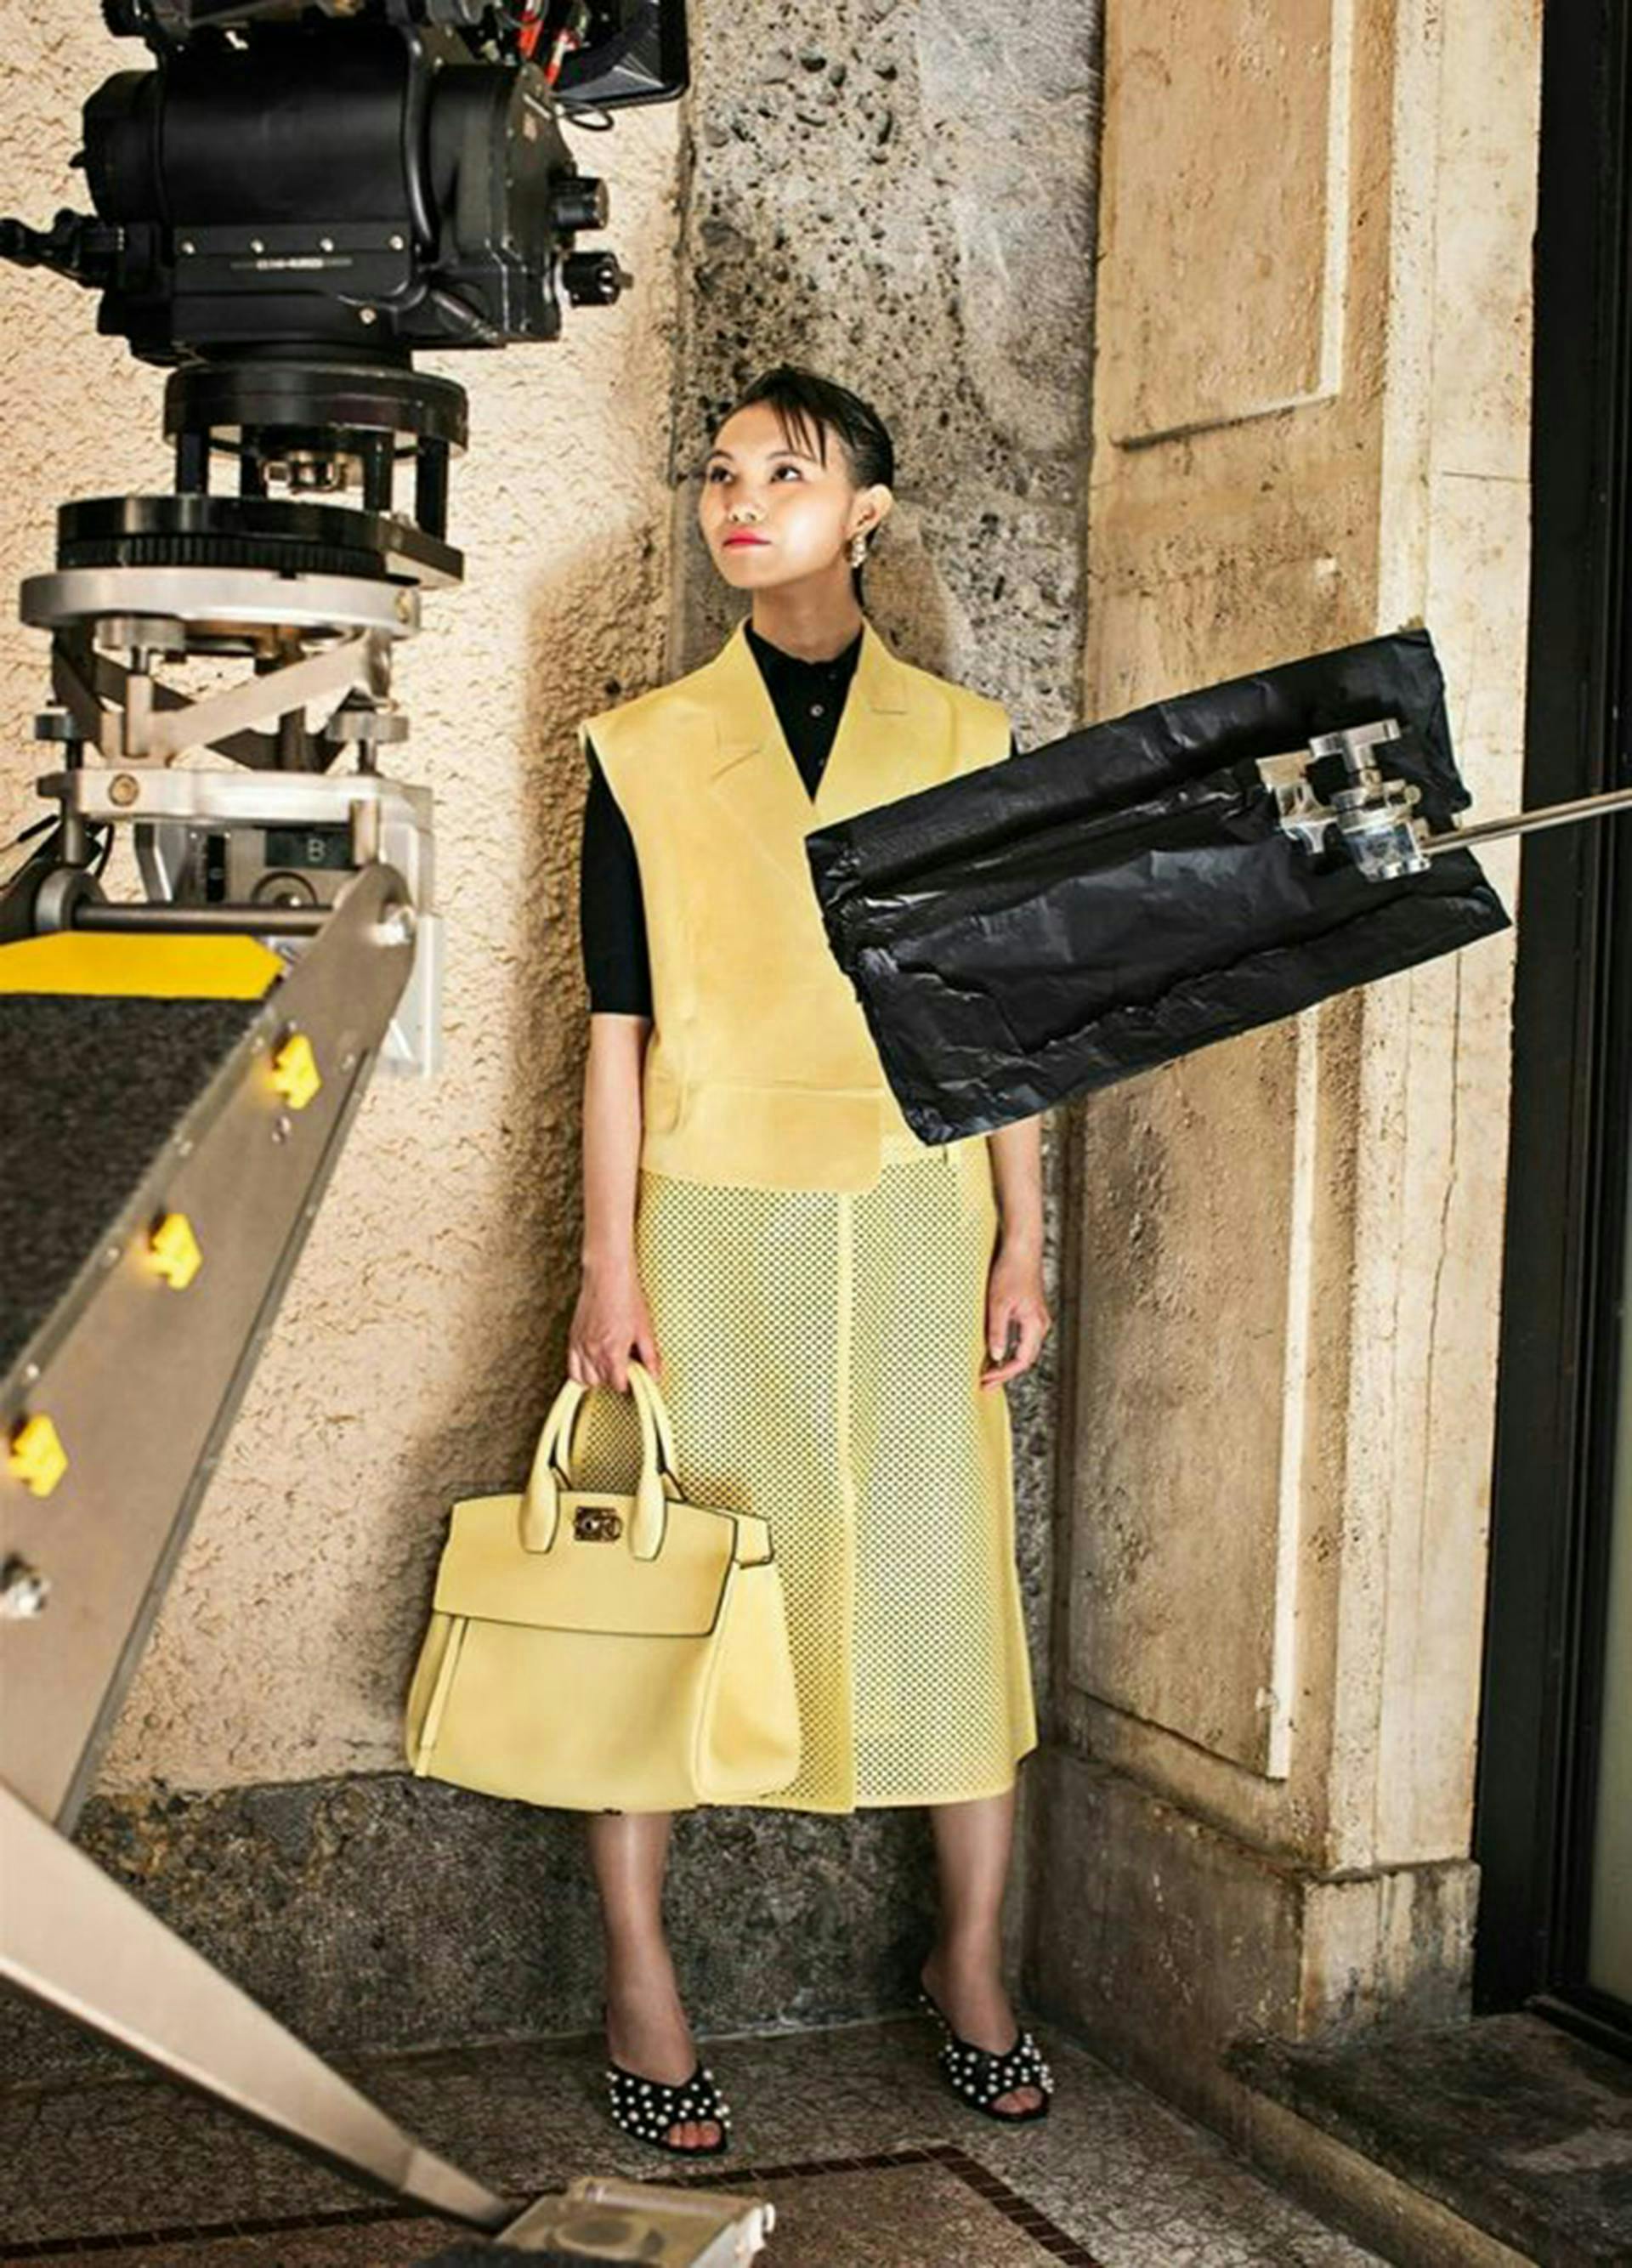 clothing apparel person human handbag bag accessories accessory footwear purse